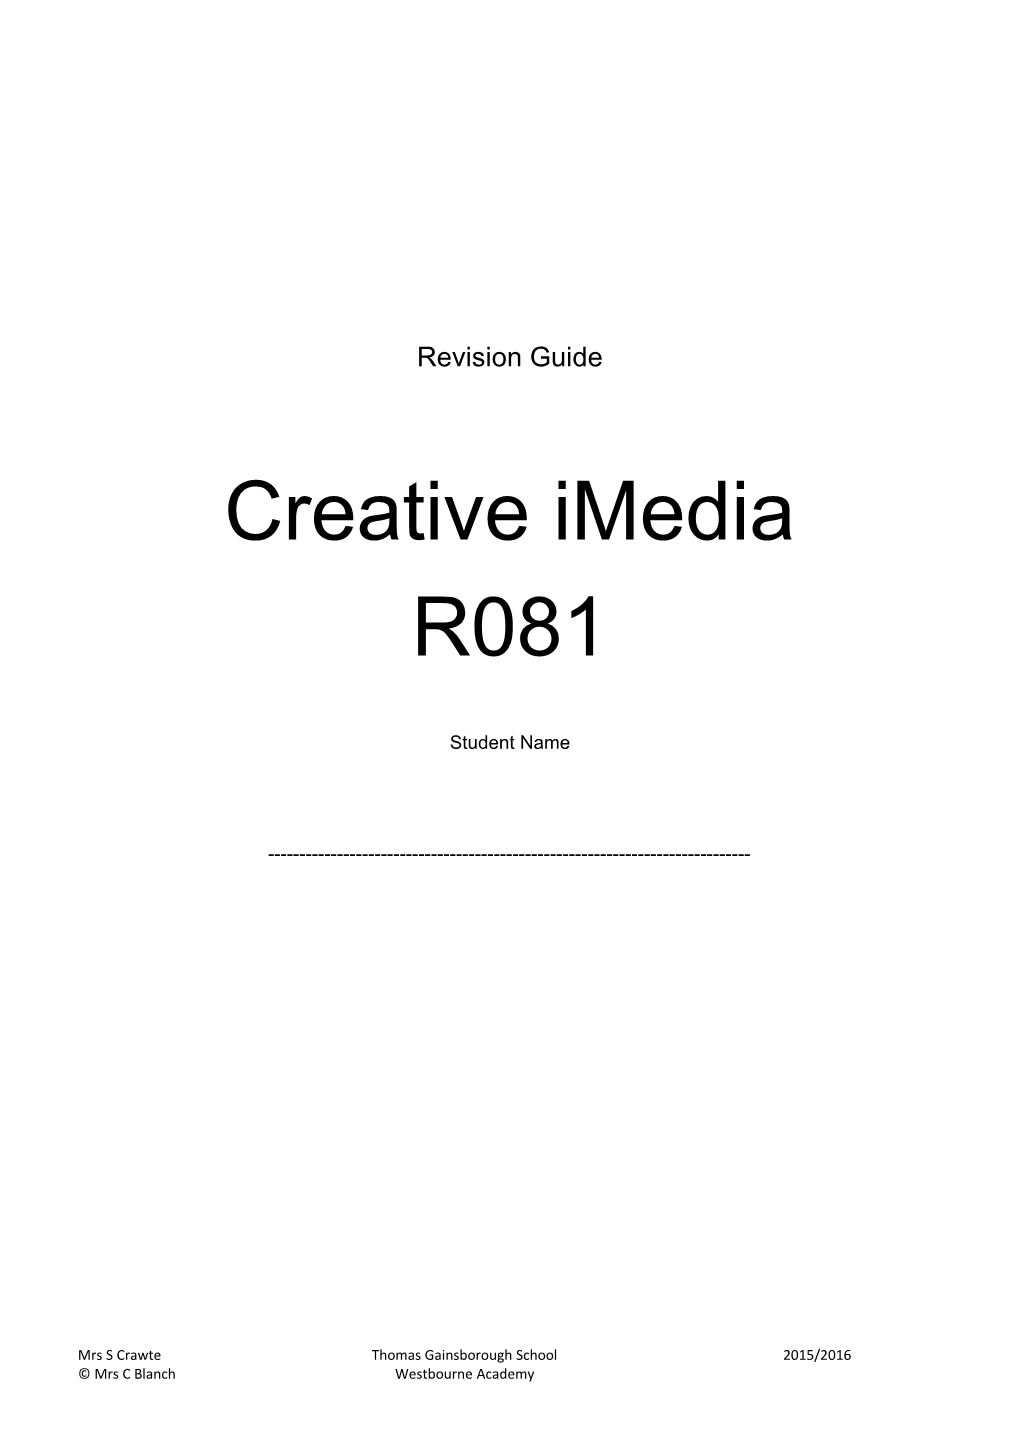 Creative R081 Revision Guide